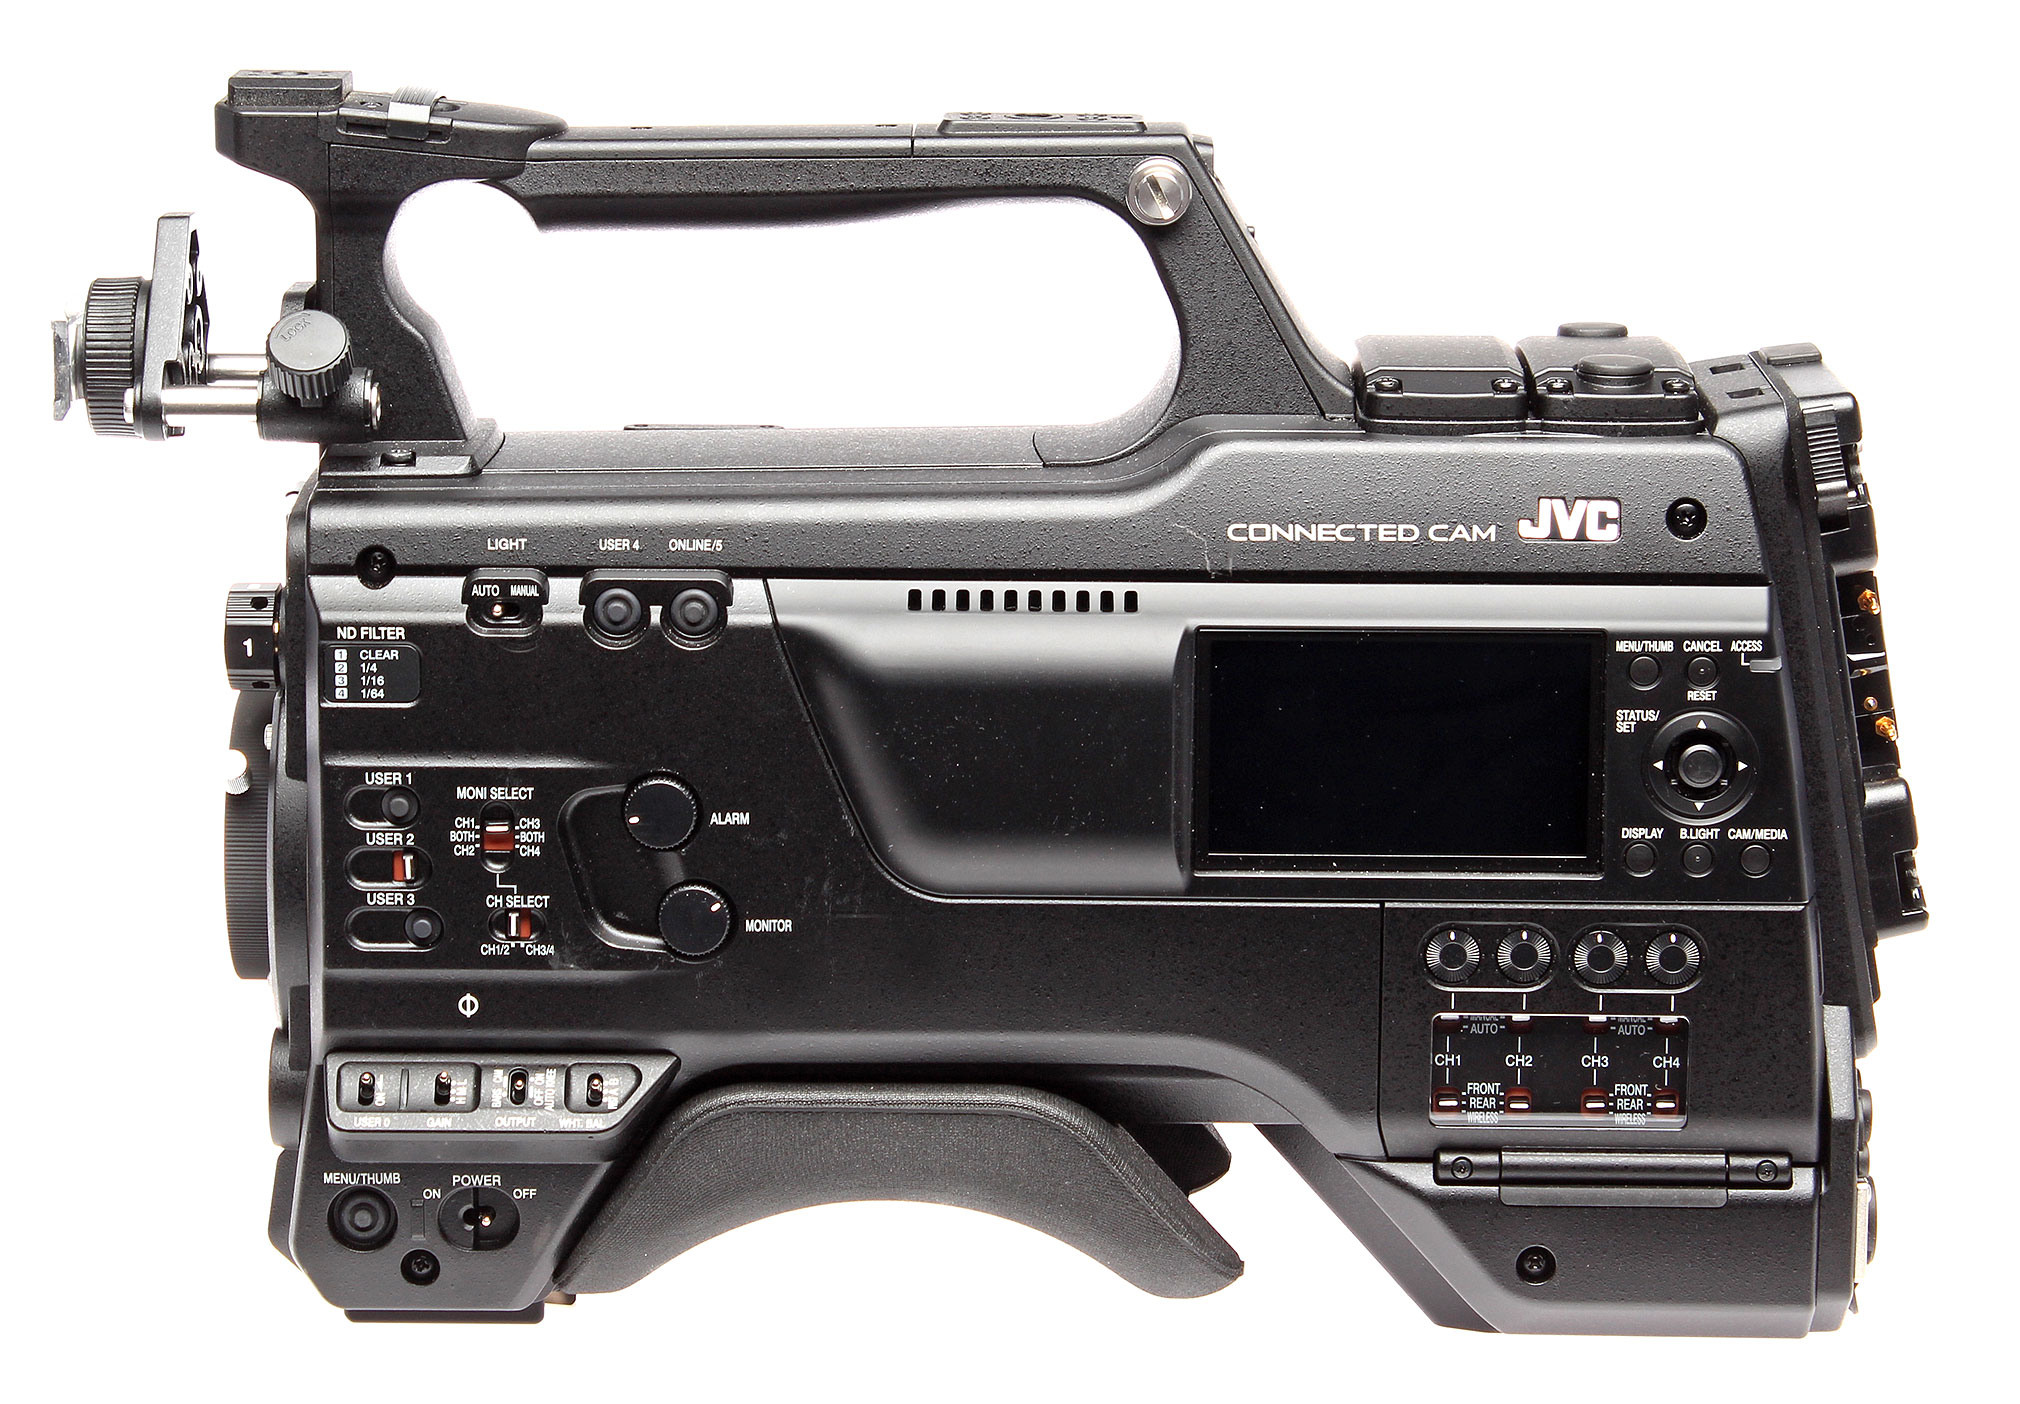 JVC GY-HC900 camera body